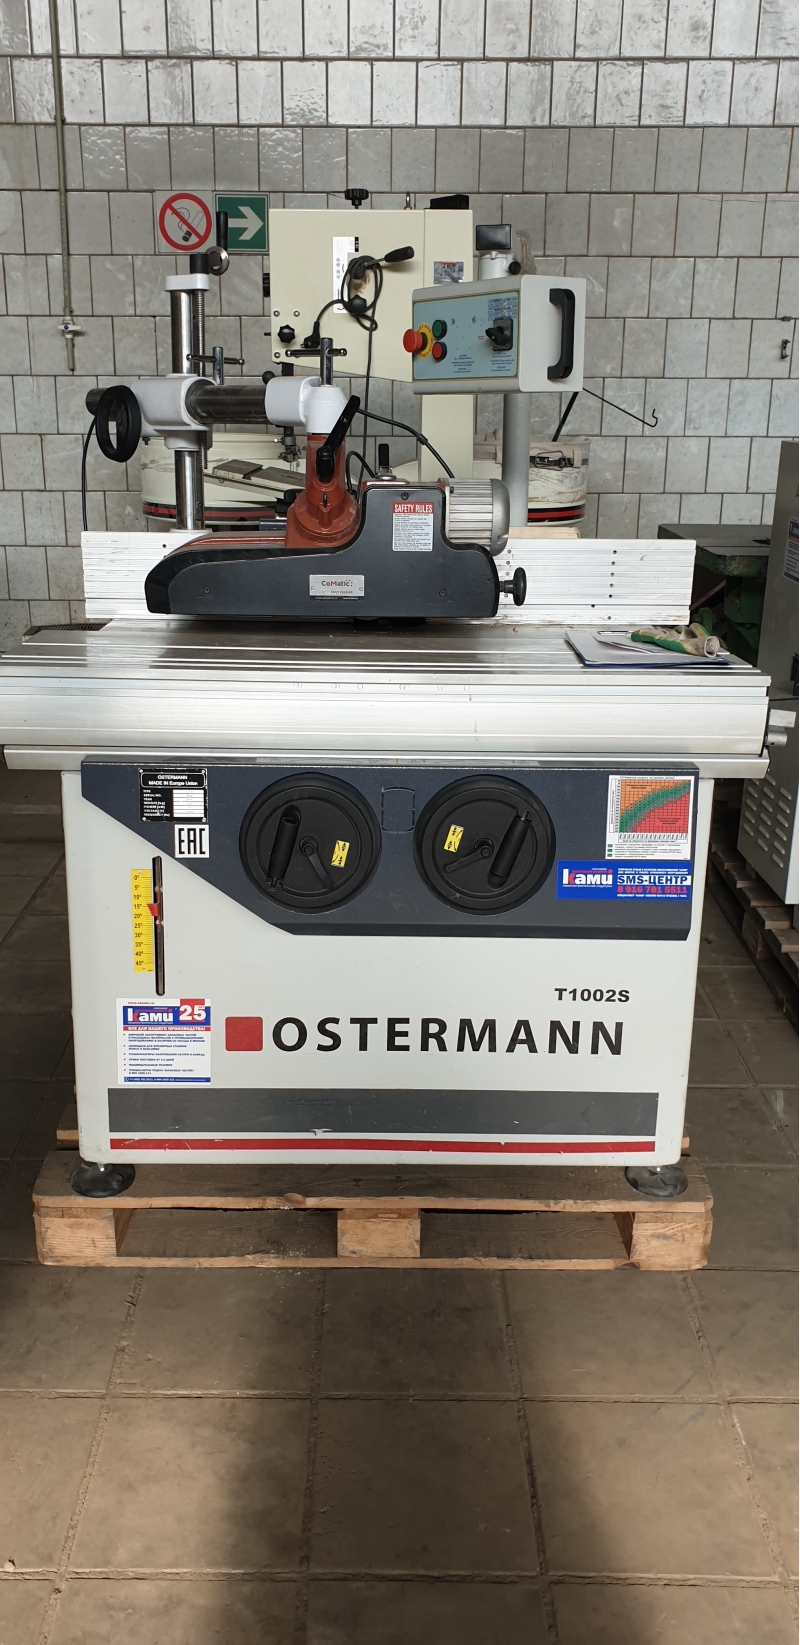   ostermann 1002S (2017)